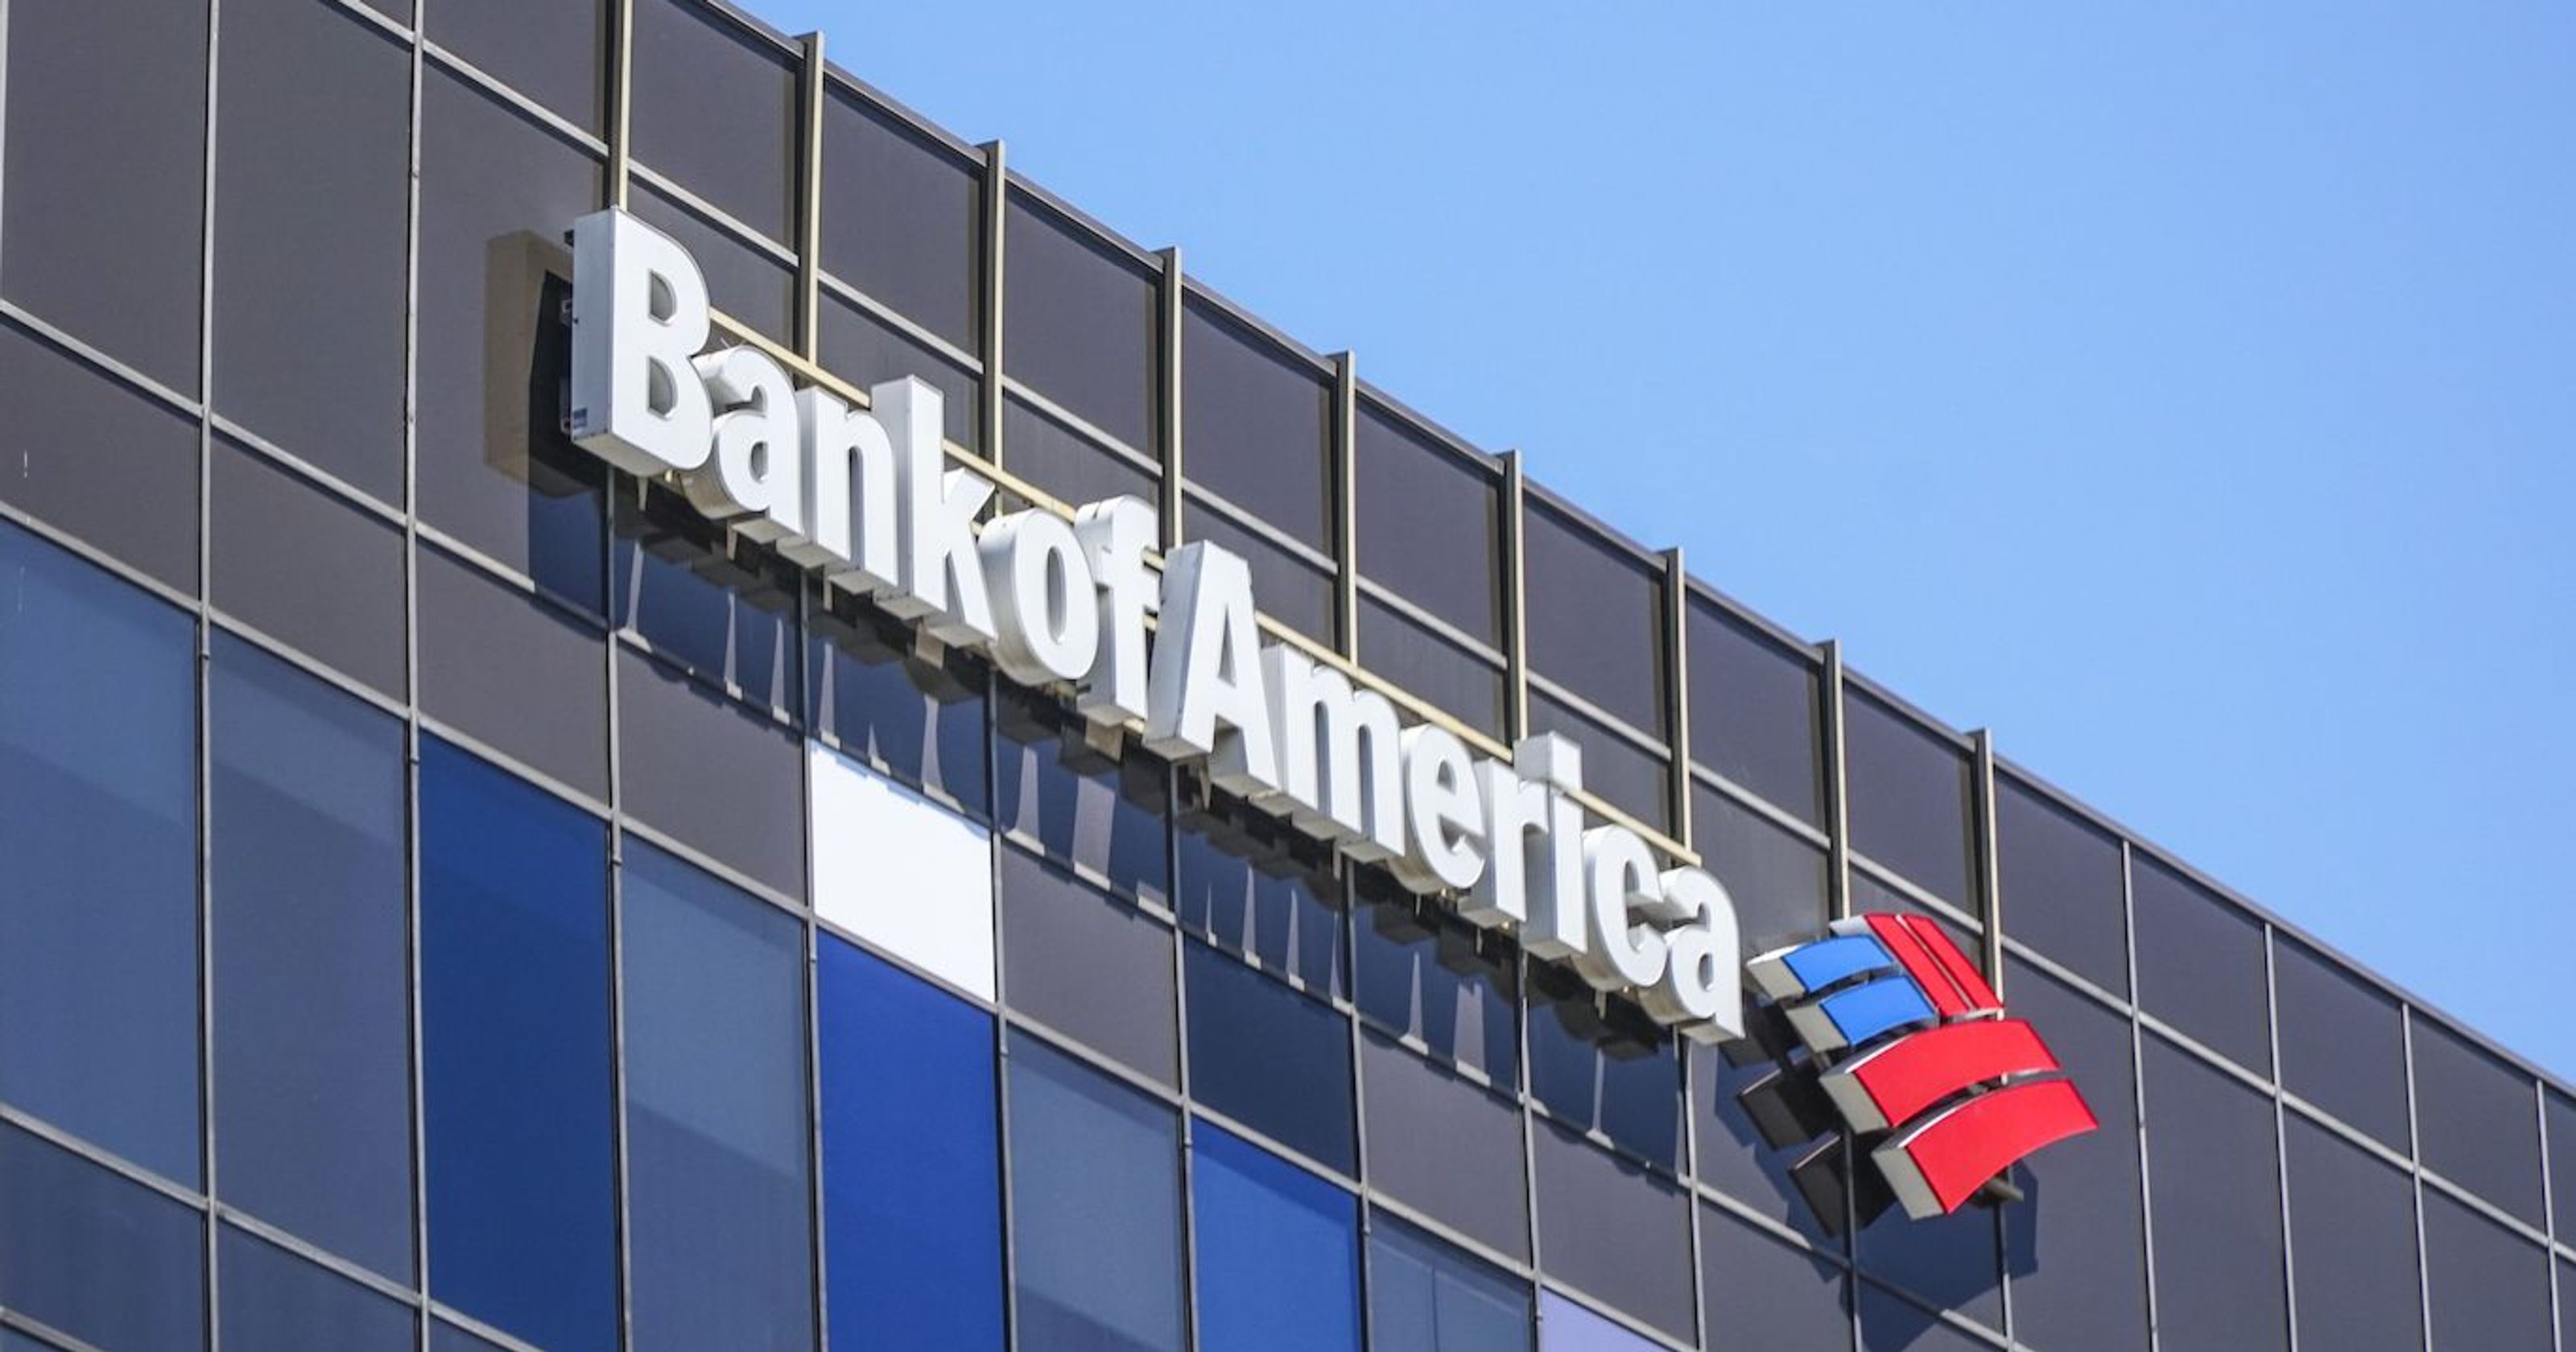 Бэнк оф сайт. Банк. Bank of America. Банк оф Америка США. Bank of America банк.